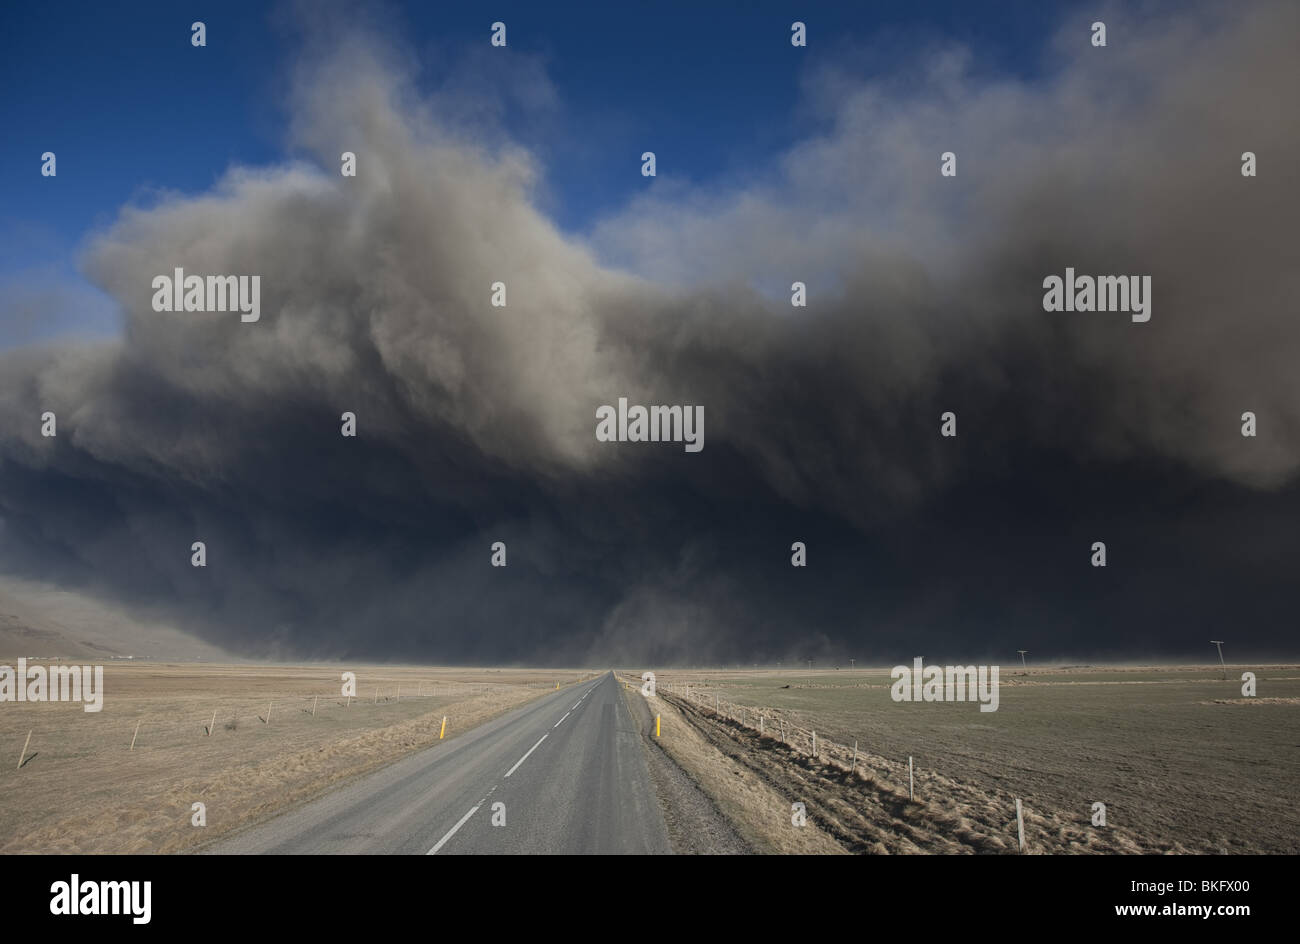 Highway One oder Ringstraße mit Aschewolke vom Vulkanausbruch Eyjafjallajökull, Island. Stockfoto